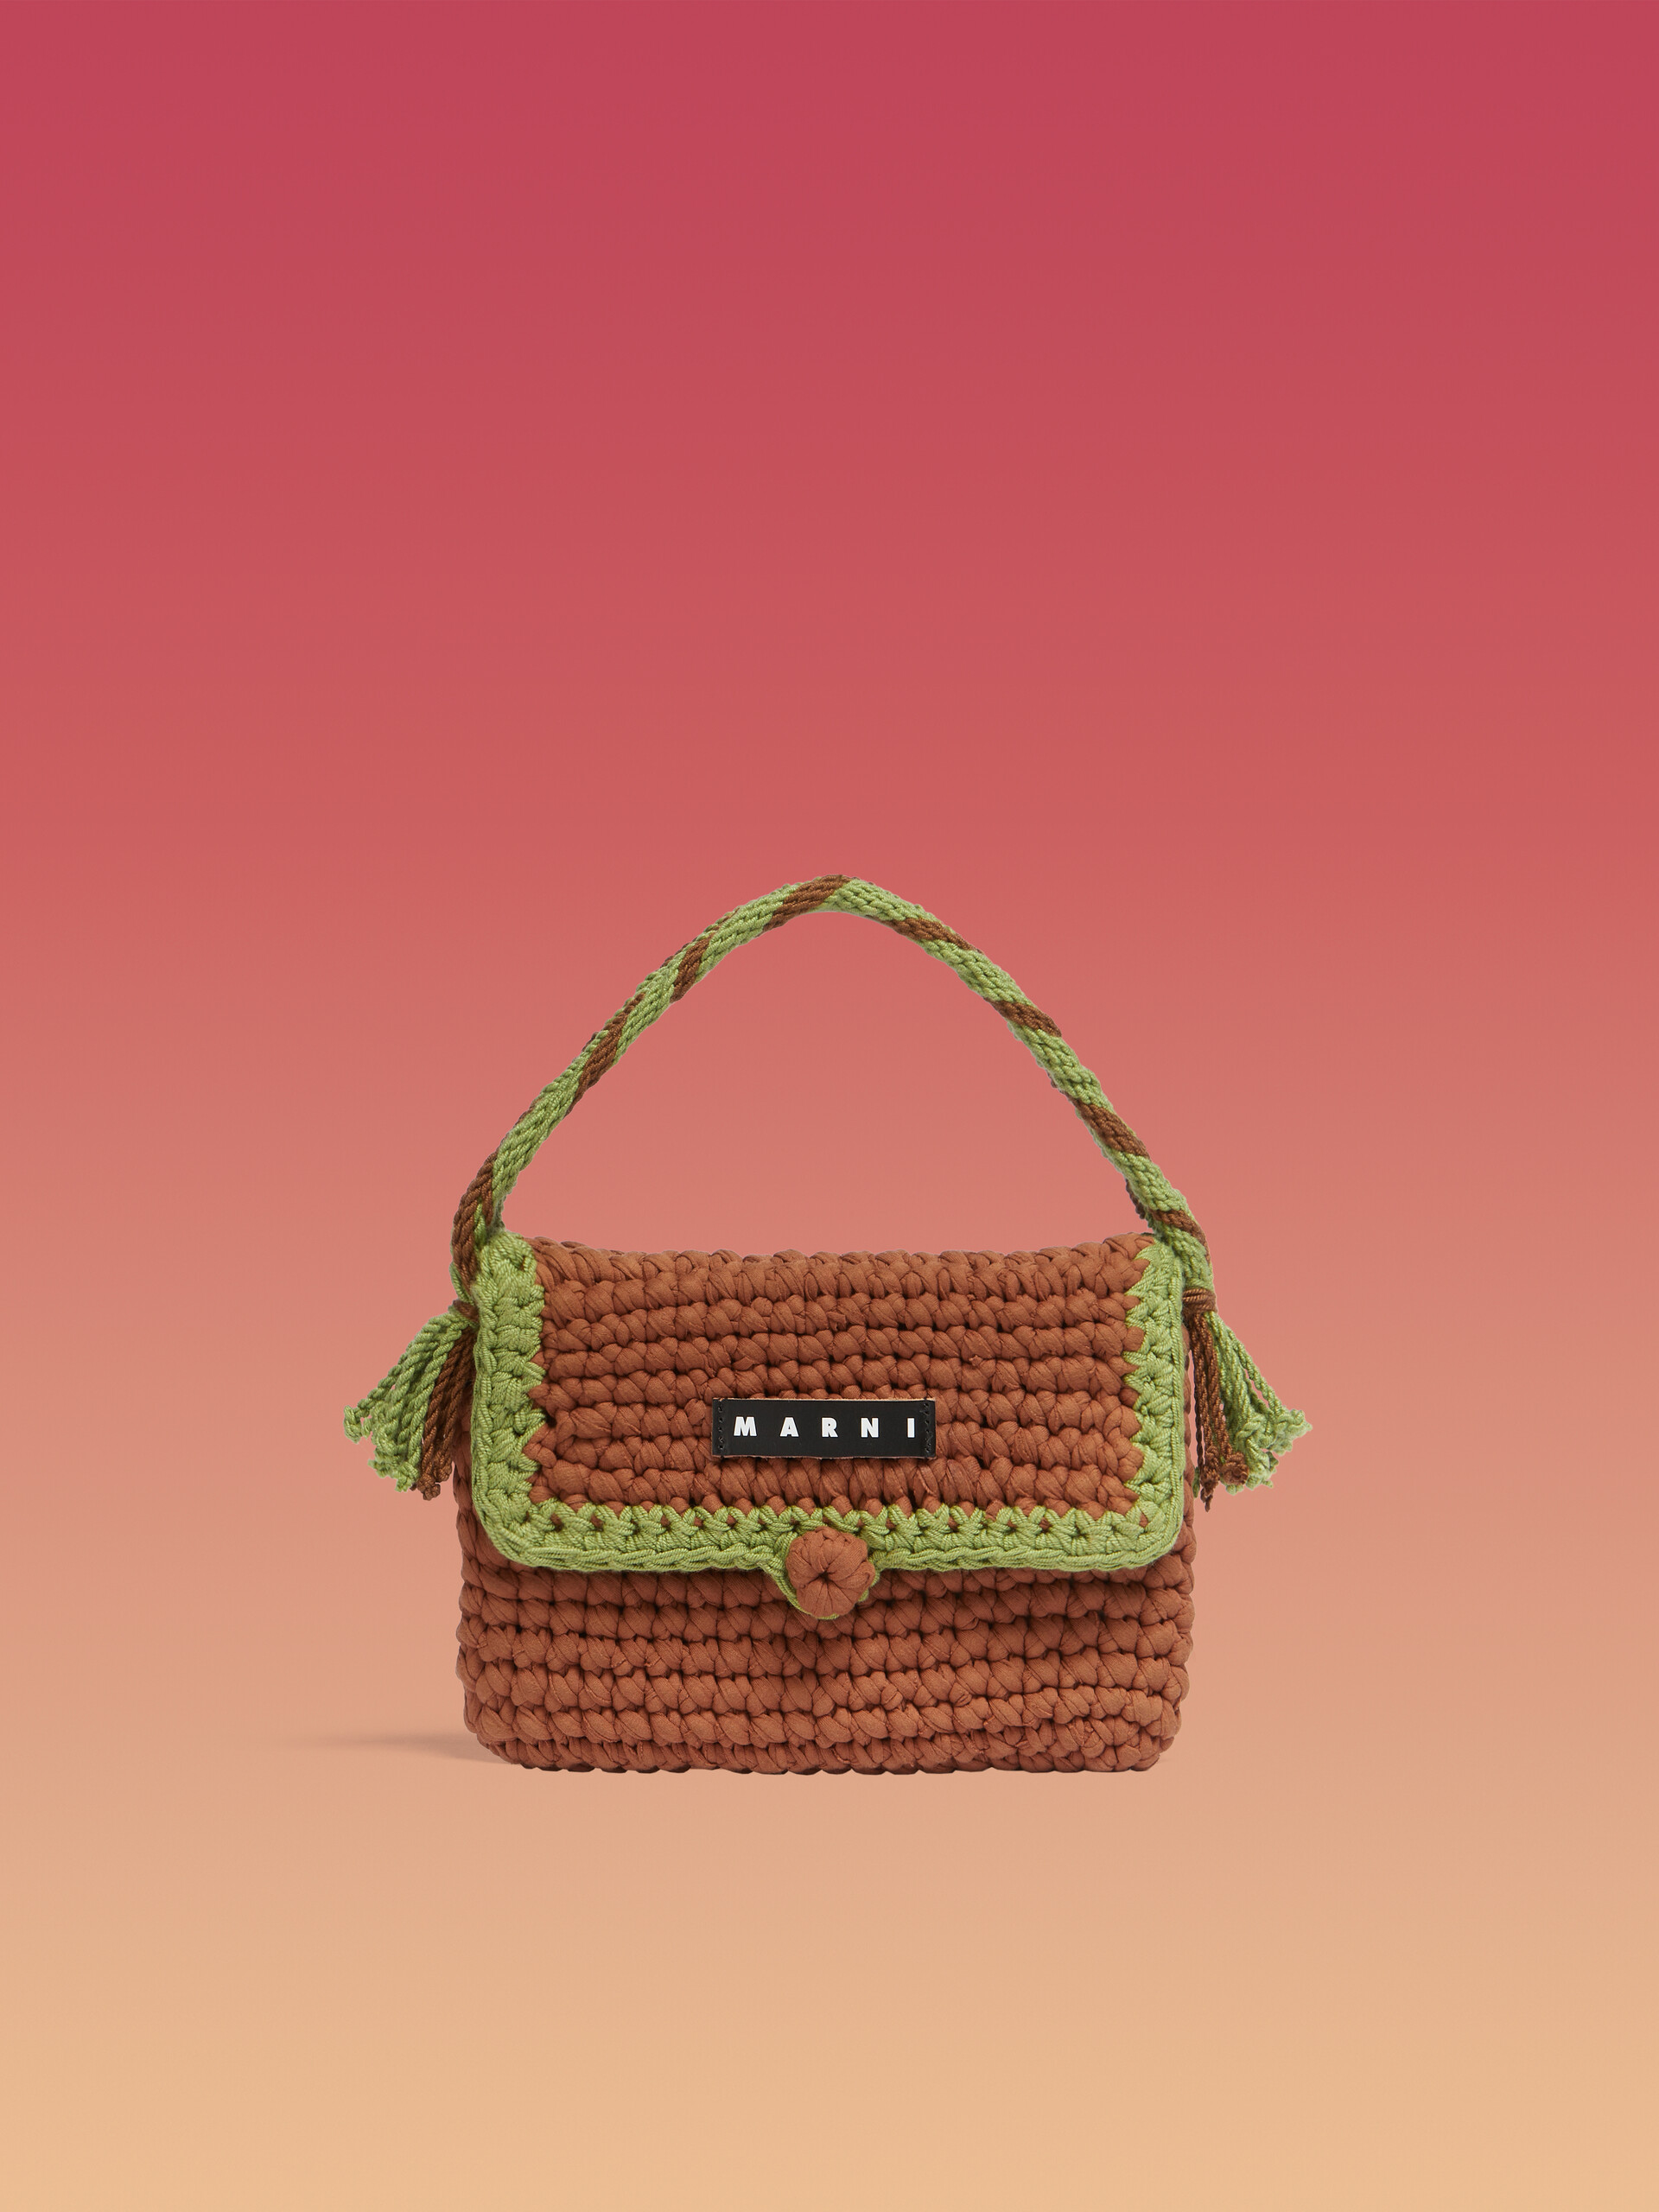 Blue Crochet Marni Market Bread Handbag - Shopping Bags - Image 1